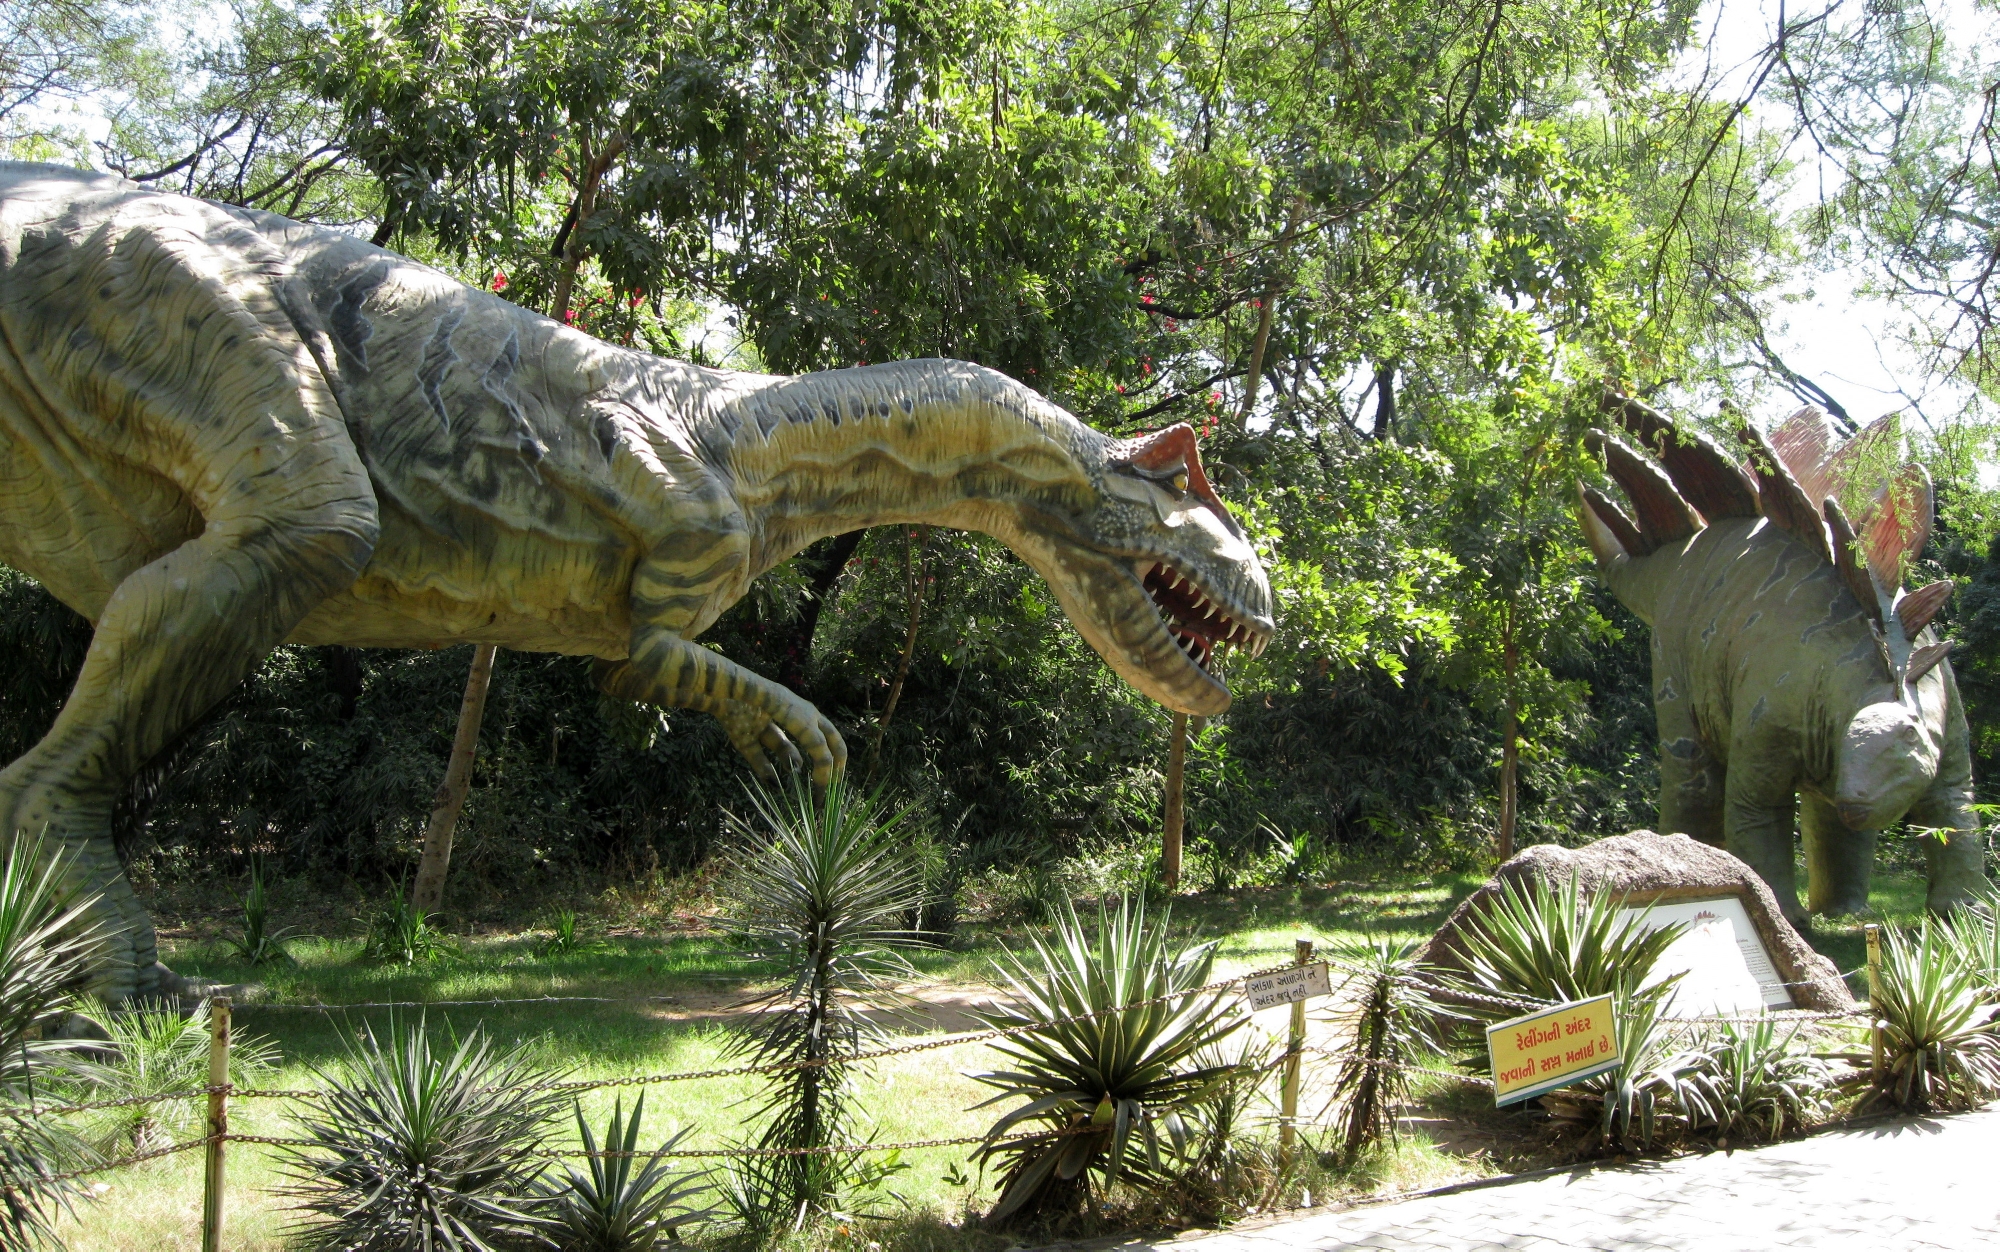 File:Dinosaurs Park.jpg - Wikimedia Commons